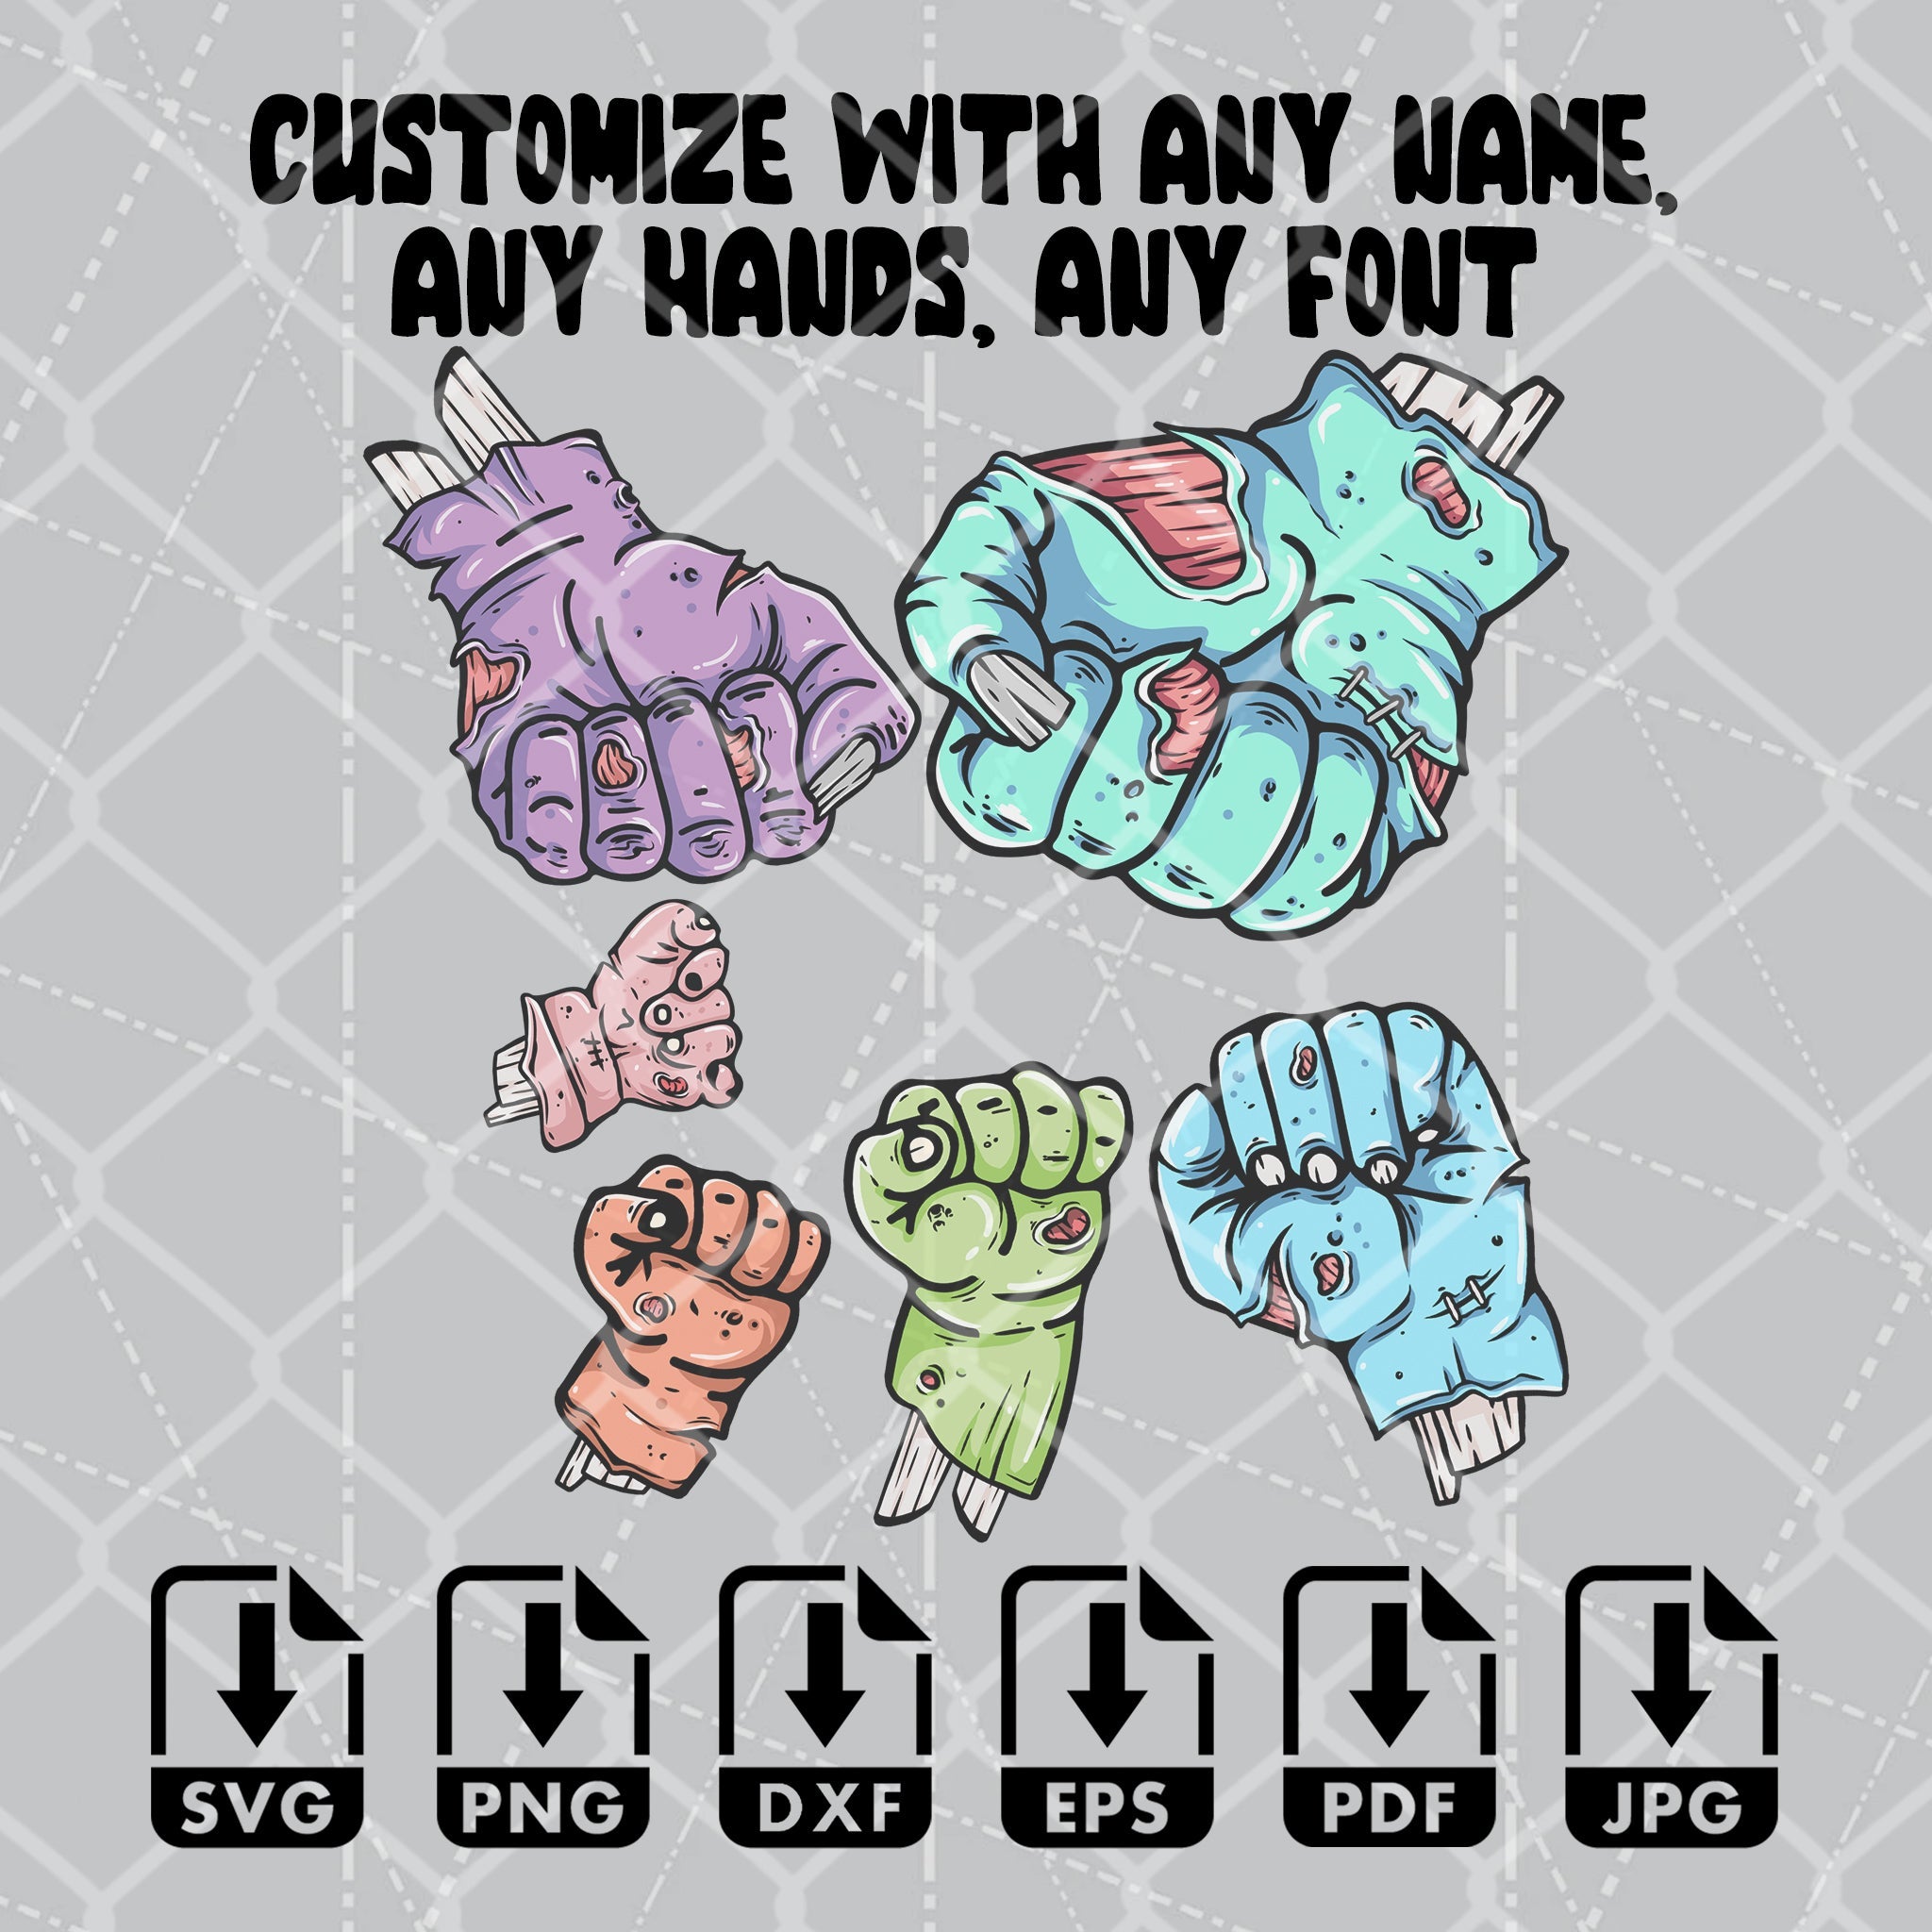 Zombie Hands Fist Bump